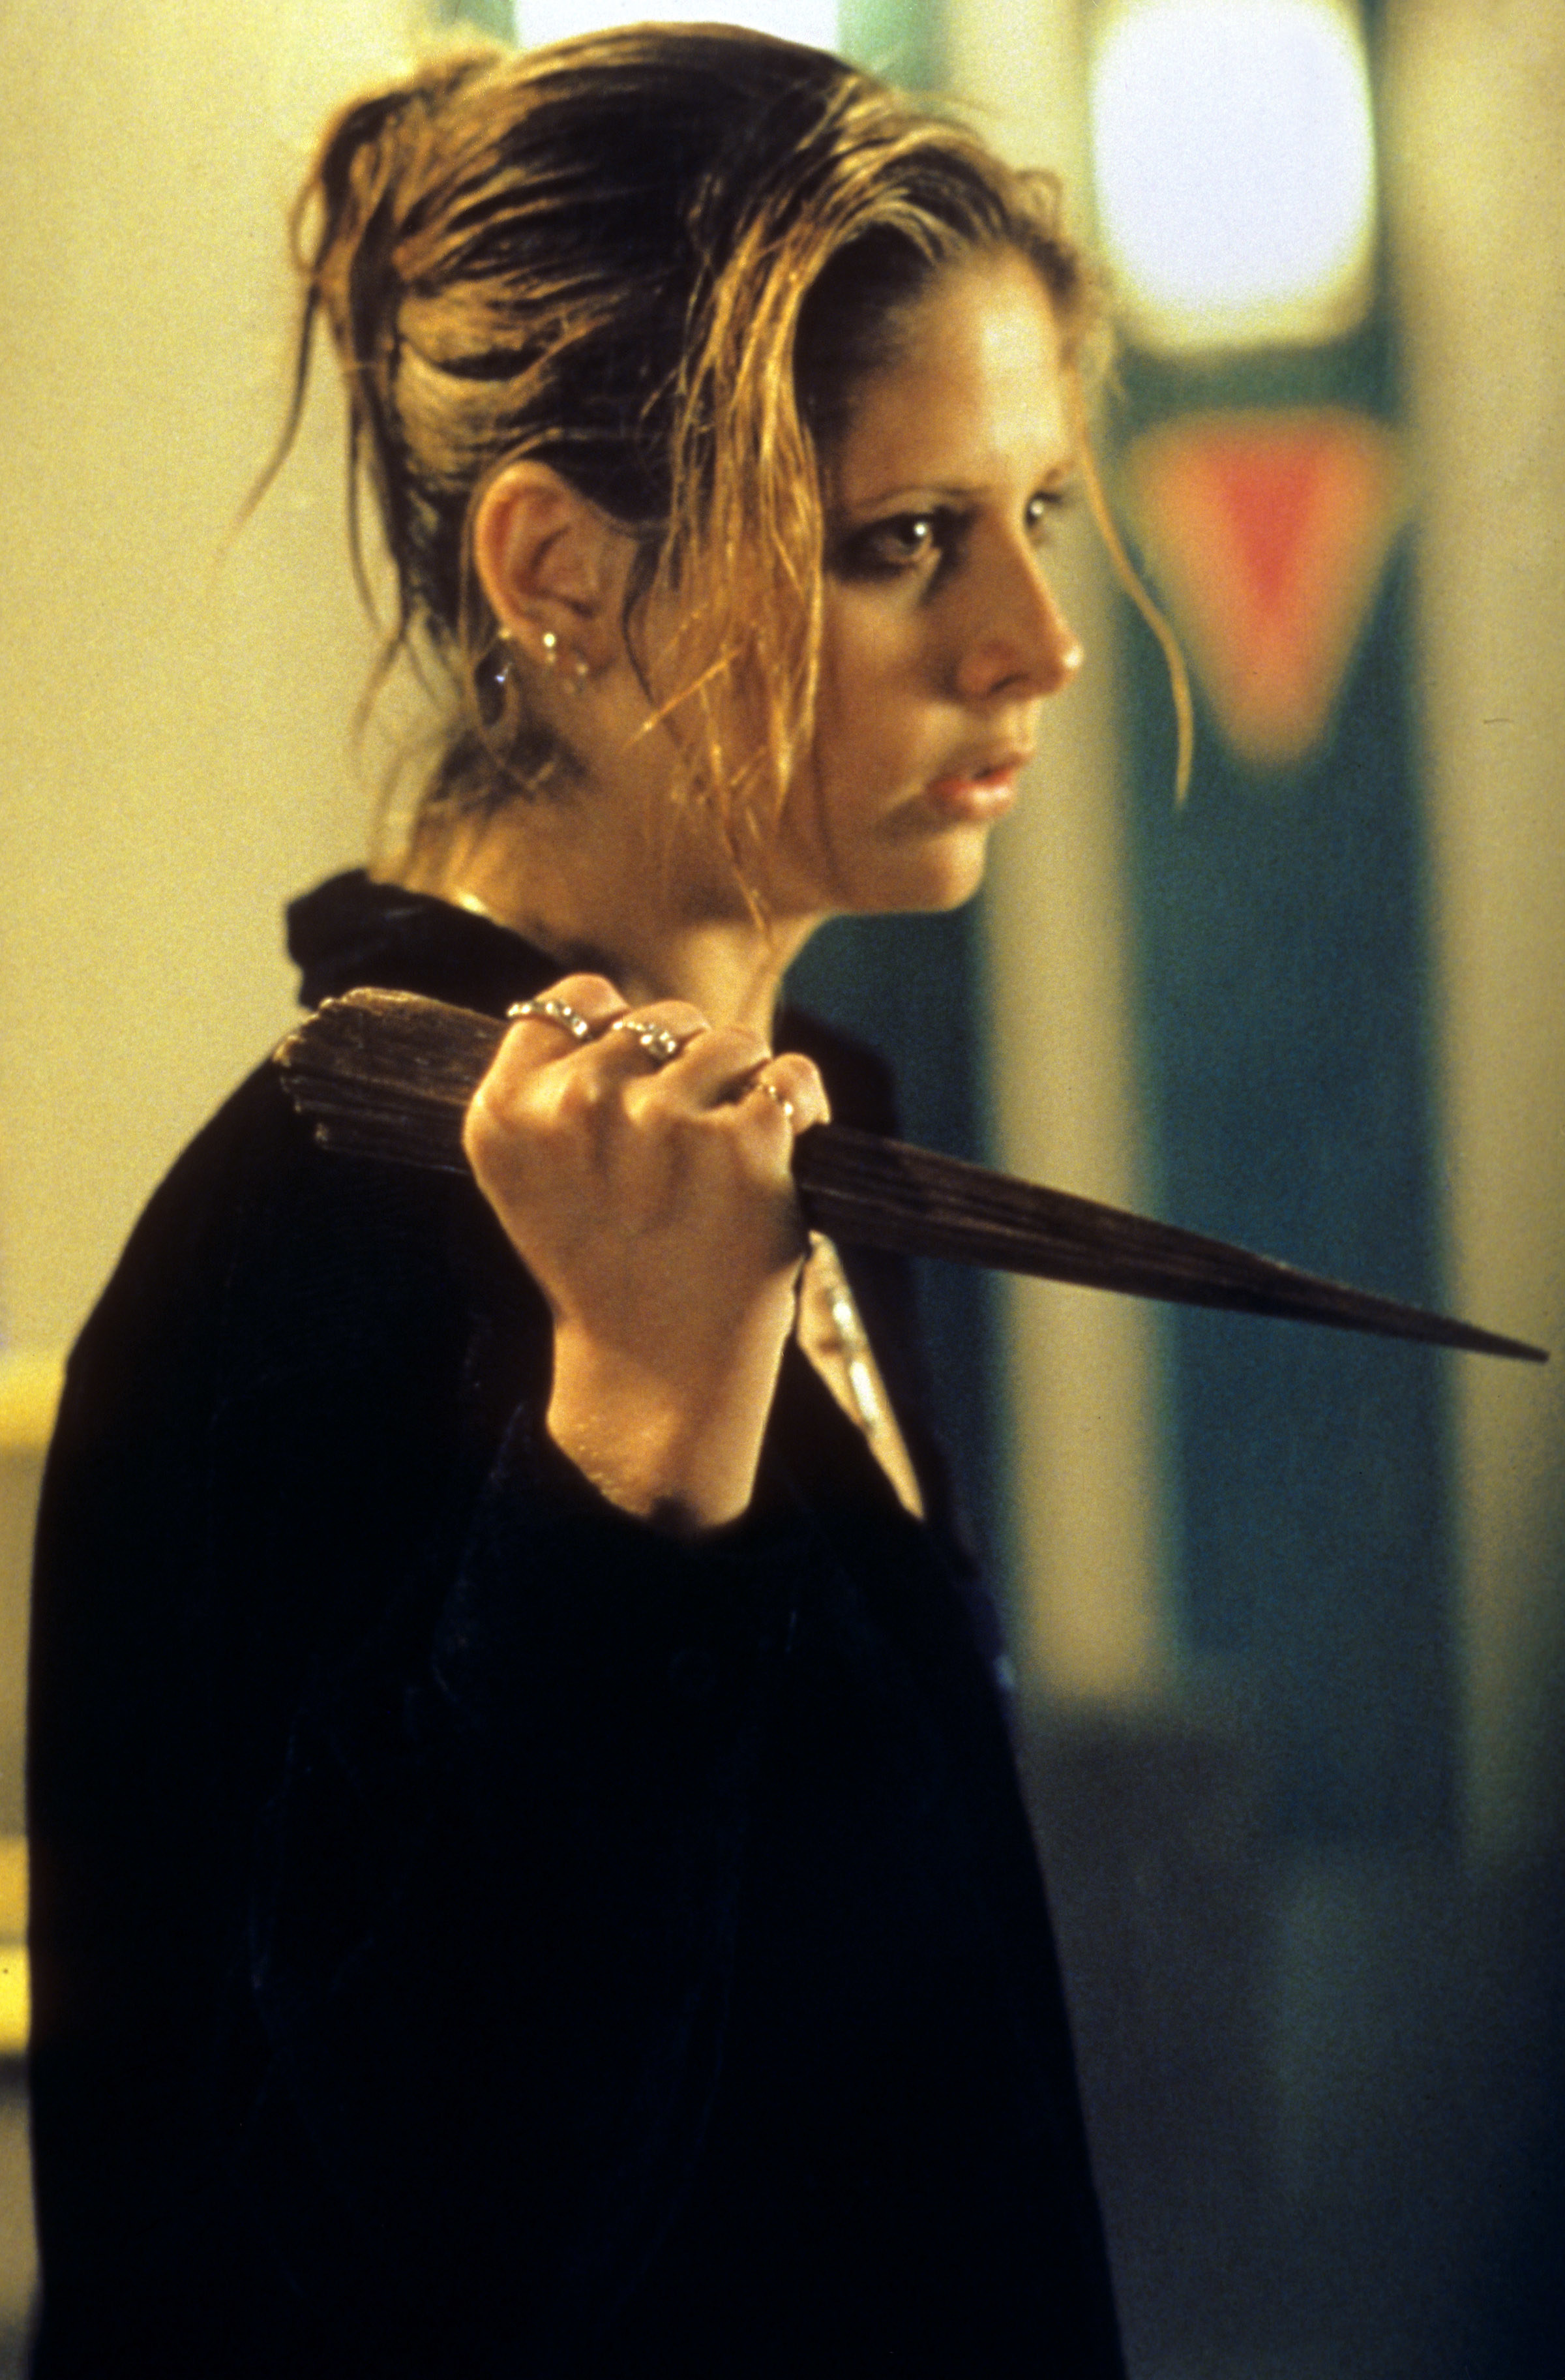 Sarah Michelle Gellar as the iconic Buffy